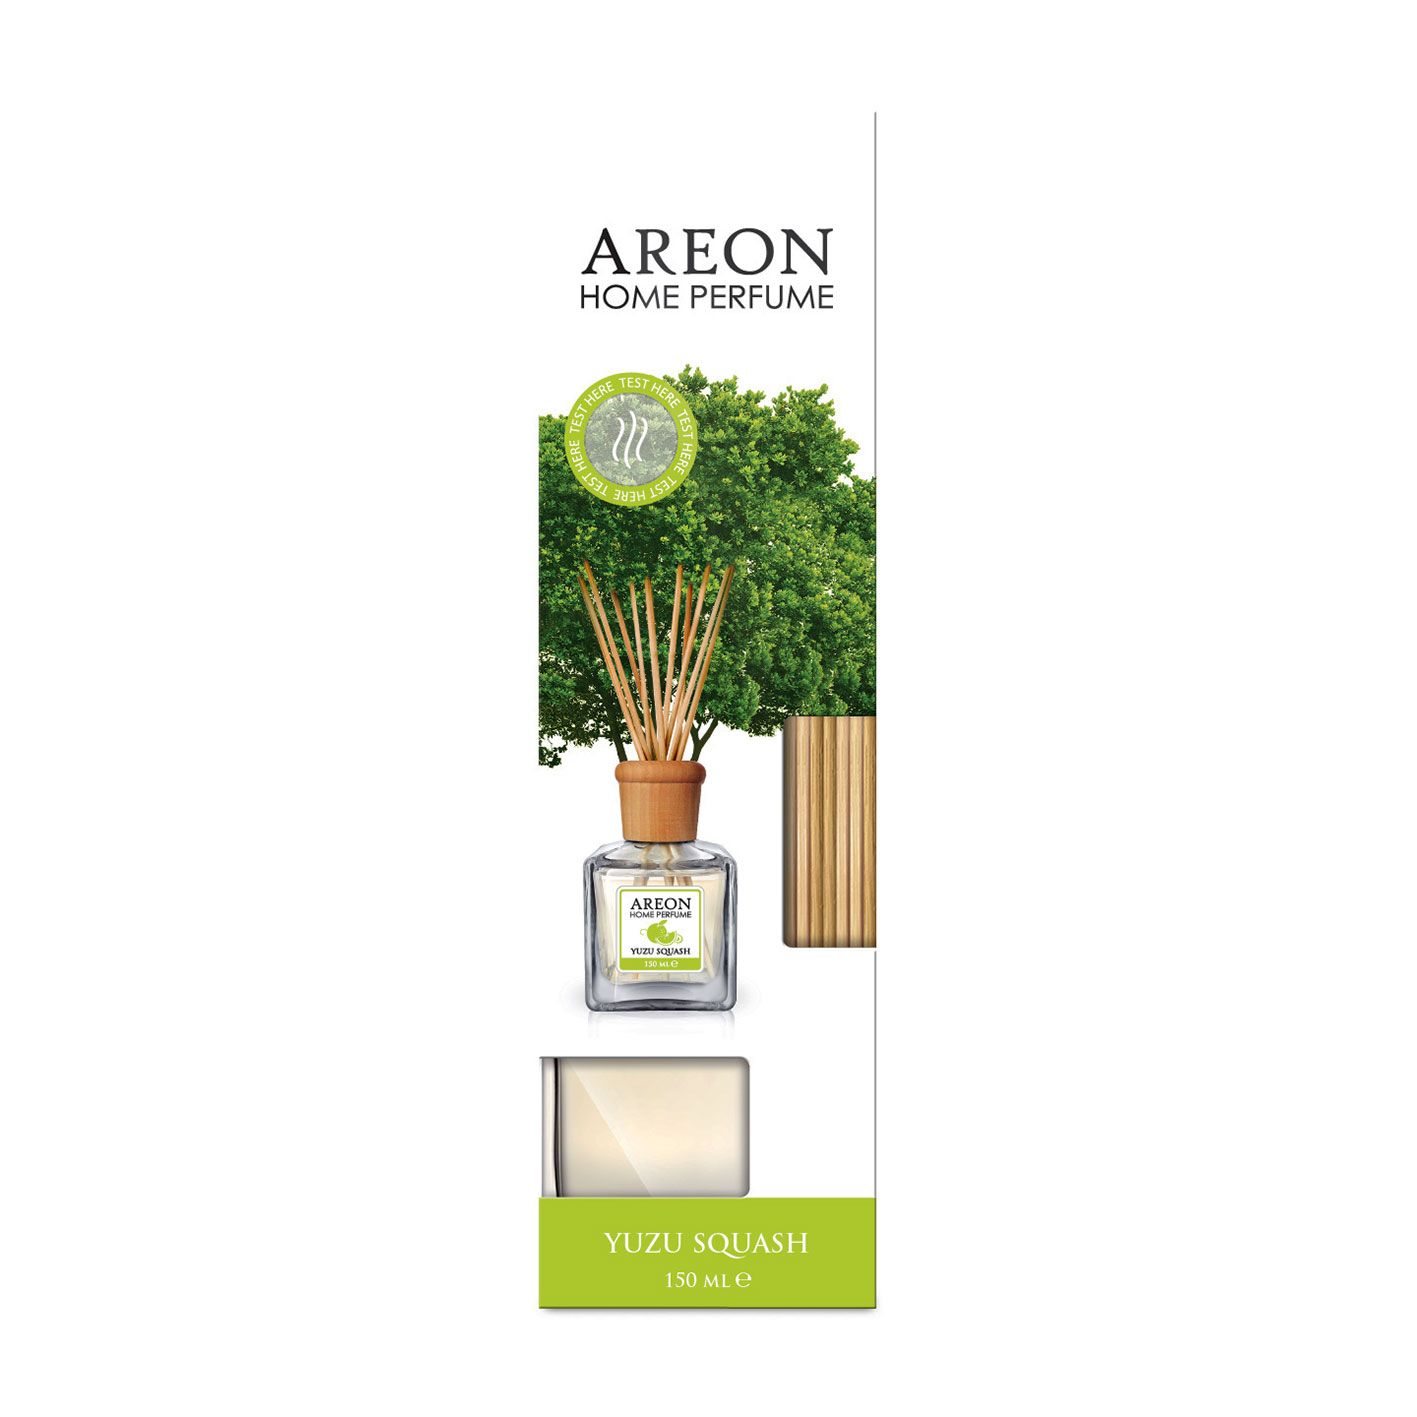 Areon Home Perfume 150ml Yuzu Squash